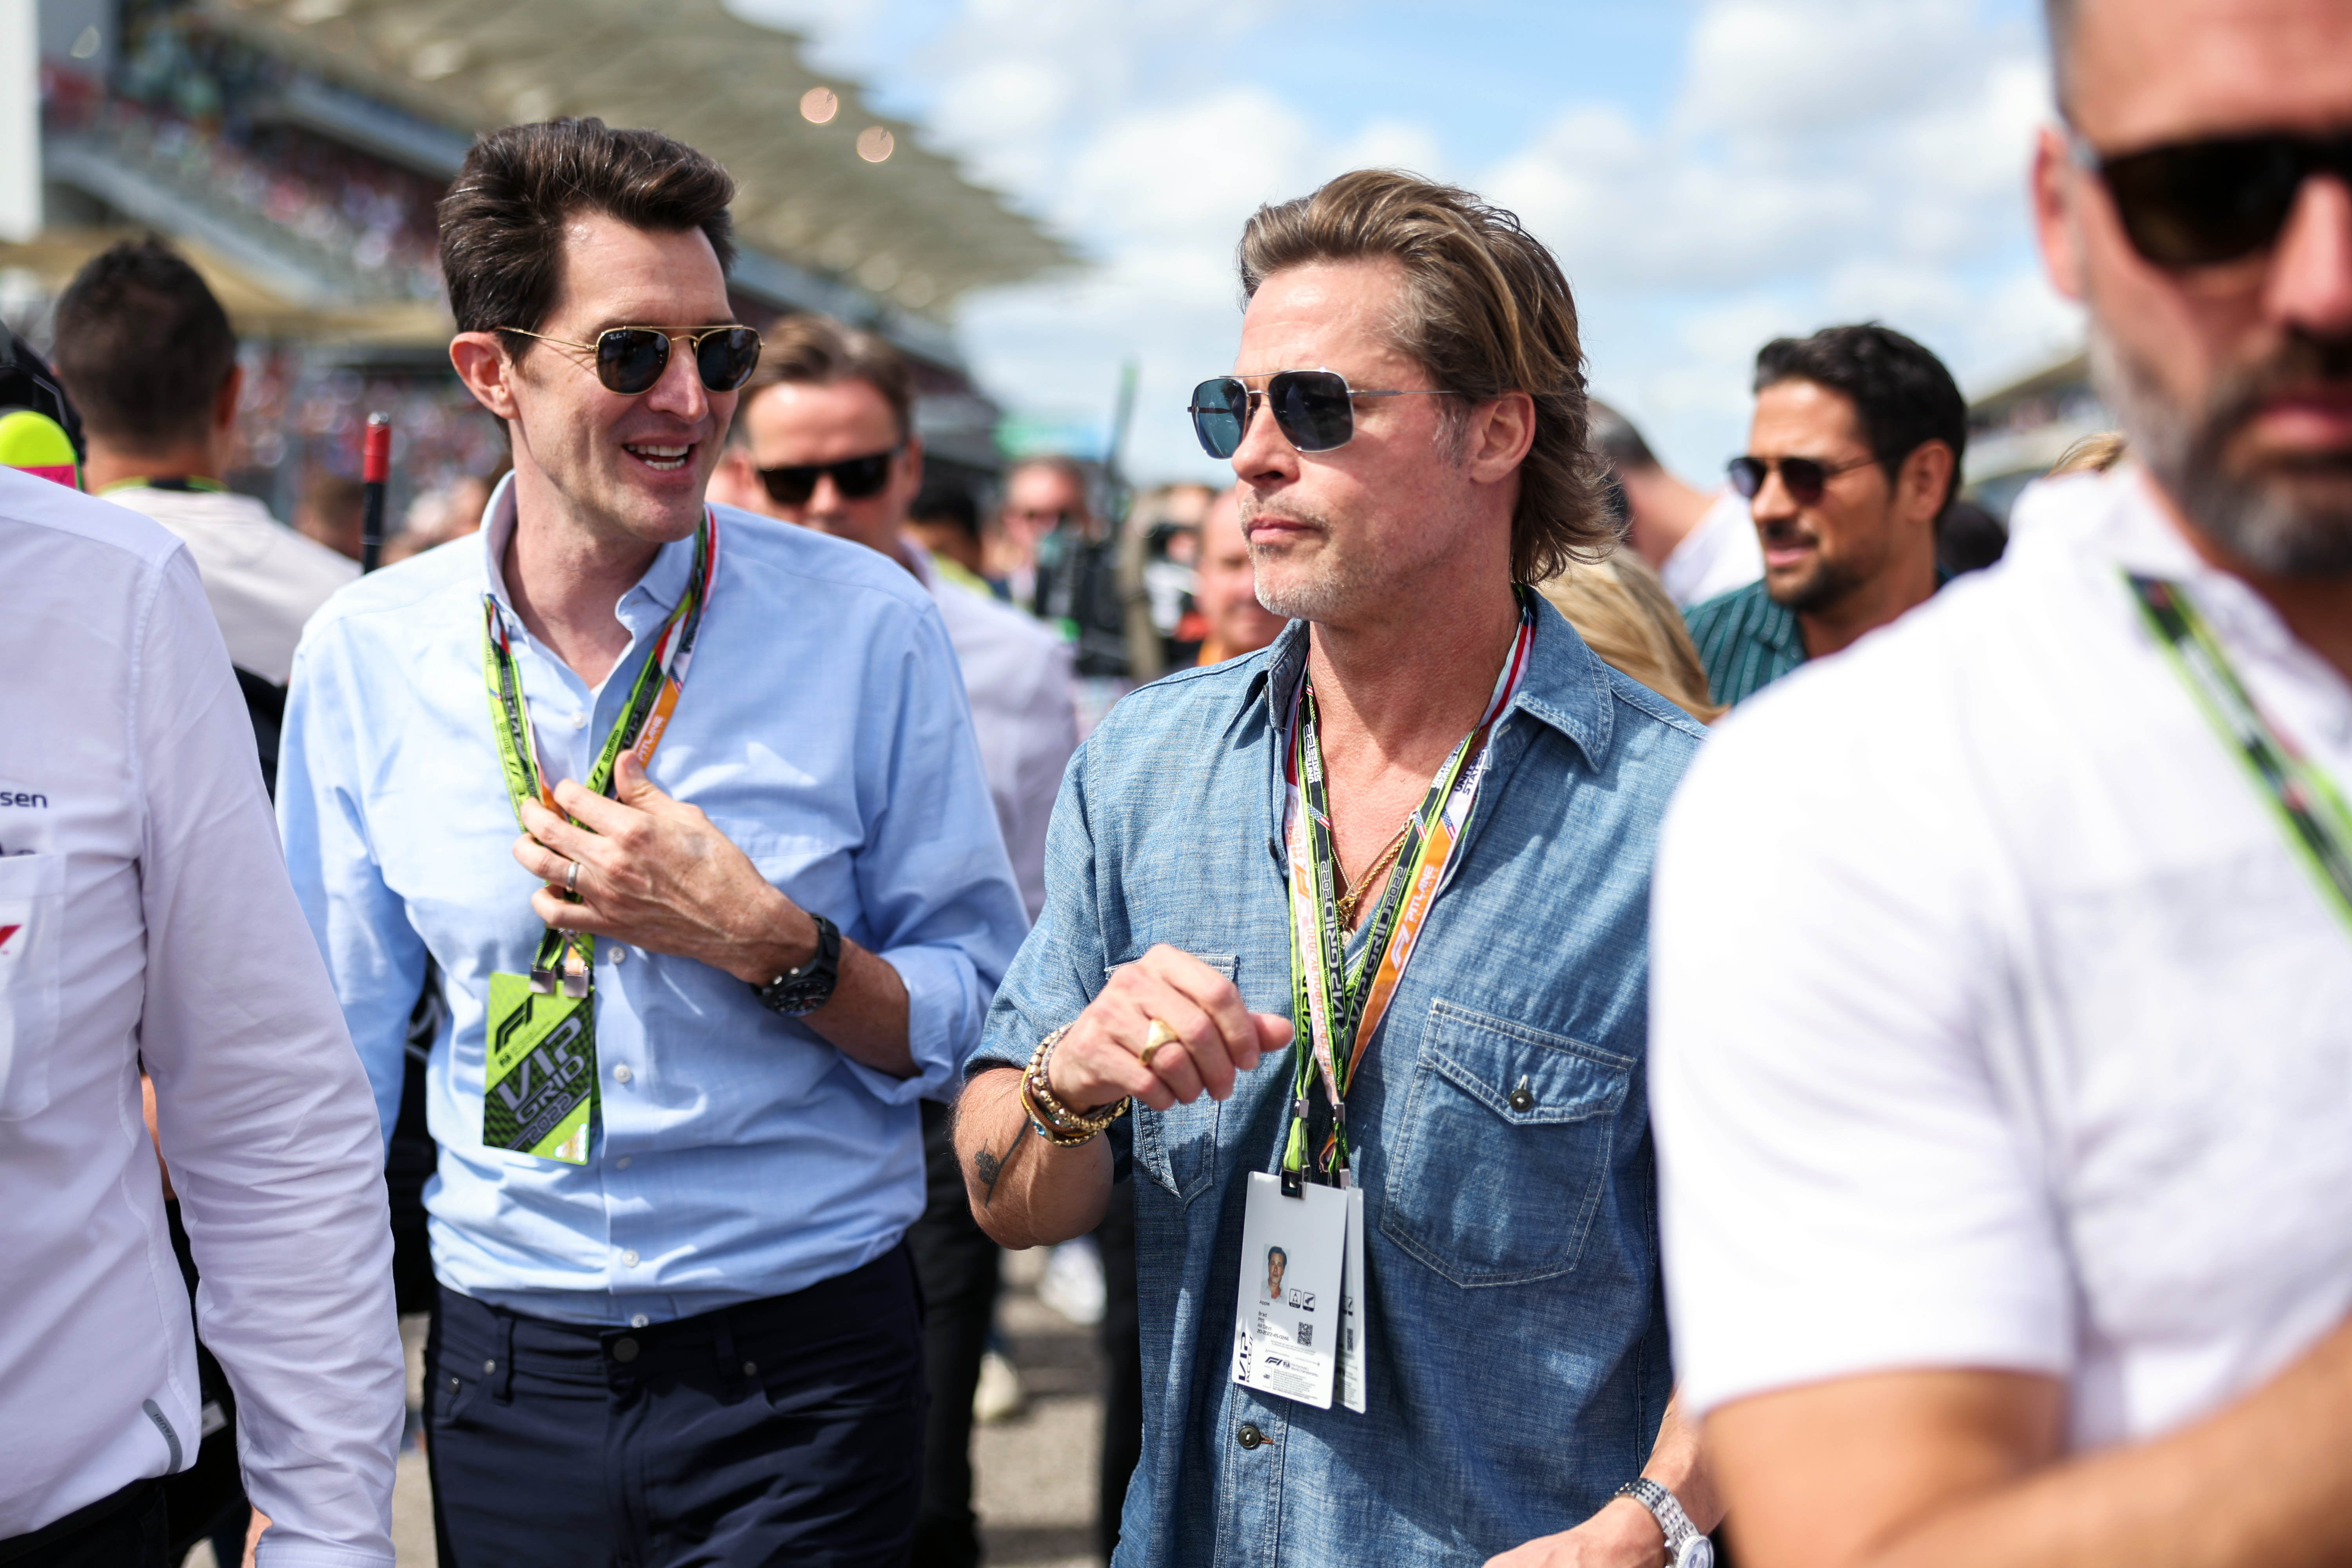 , Brad Pitt set to race F1 star Lewis Hamilton in British Grand Prix as he films latest blockbuster